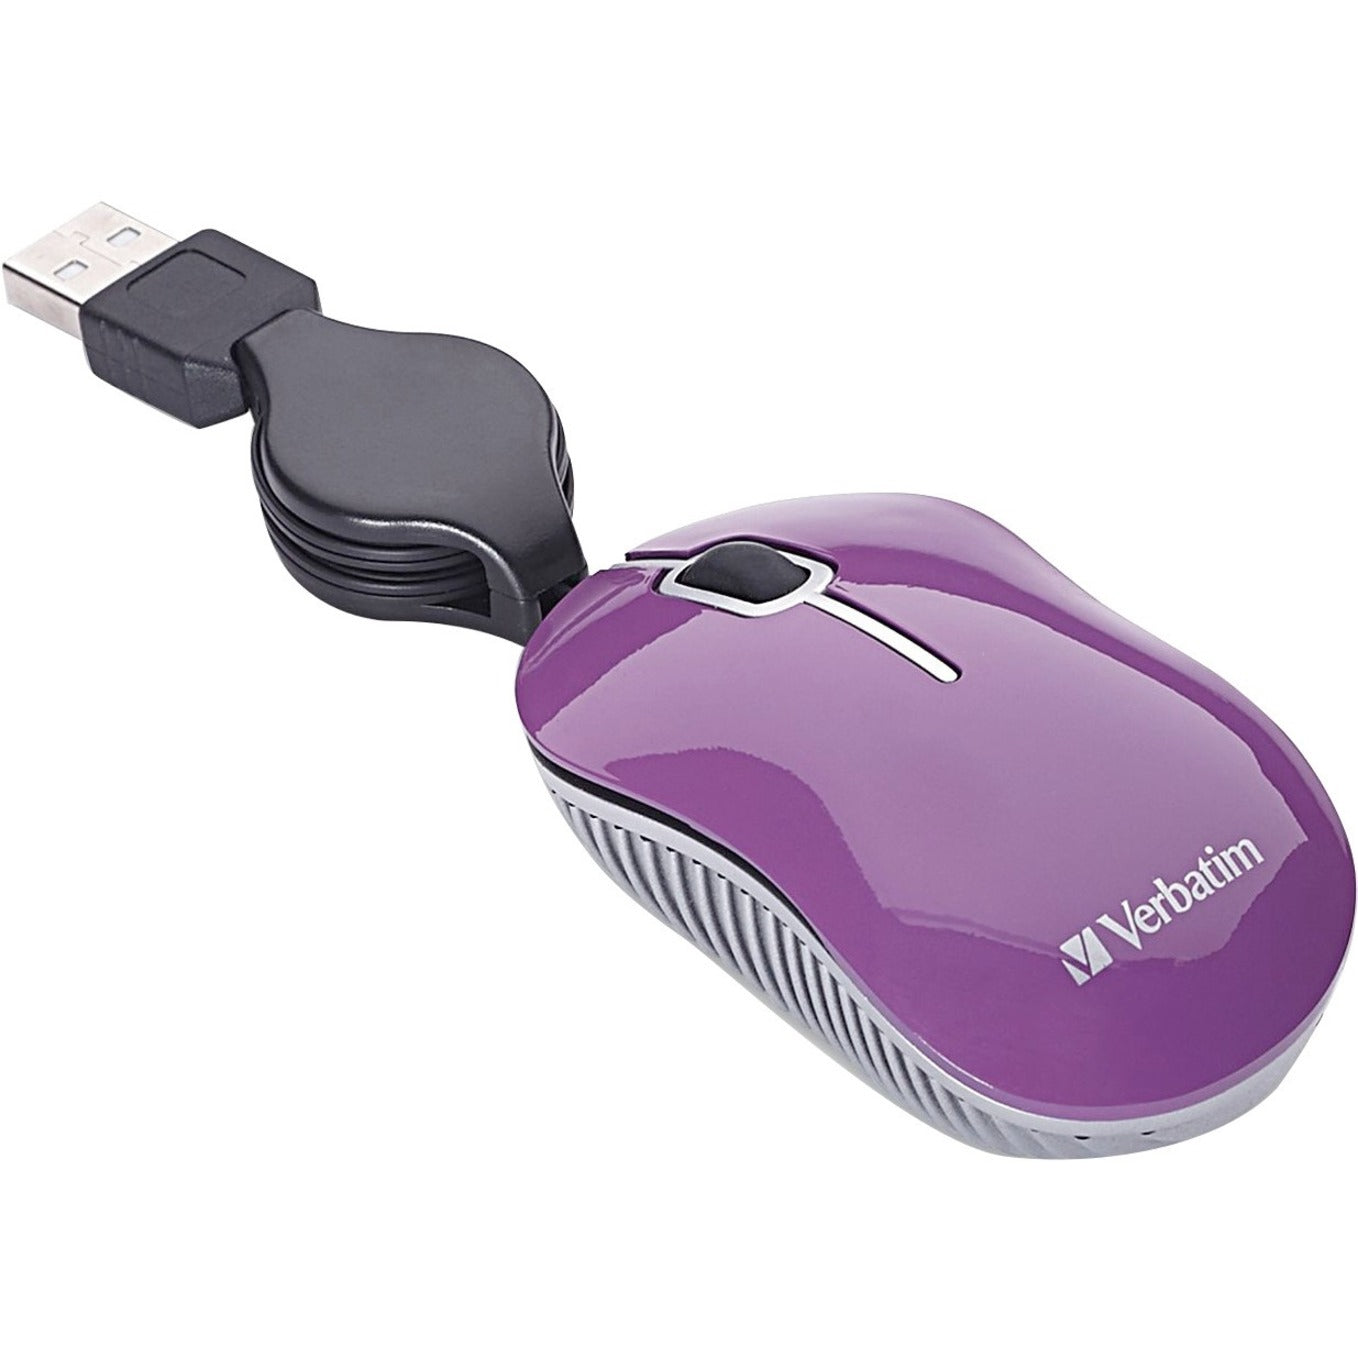 Verbatim 98617 Mini Travel Optical Mouse, Purple, Scrolling Wheel, USB 2.0